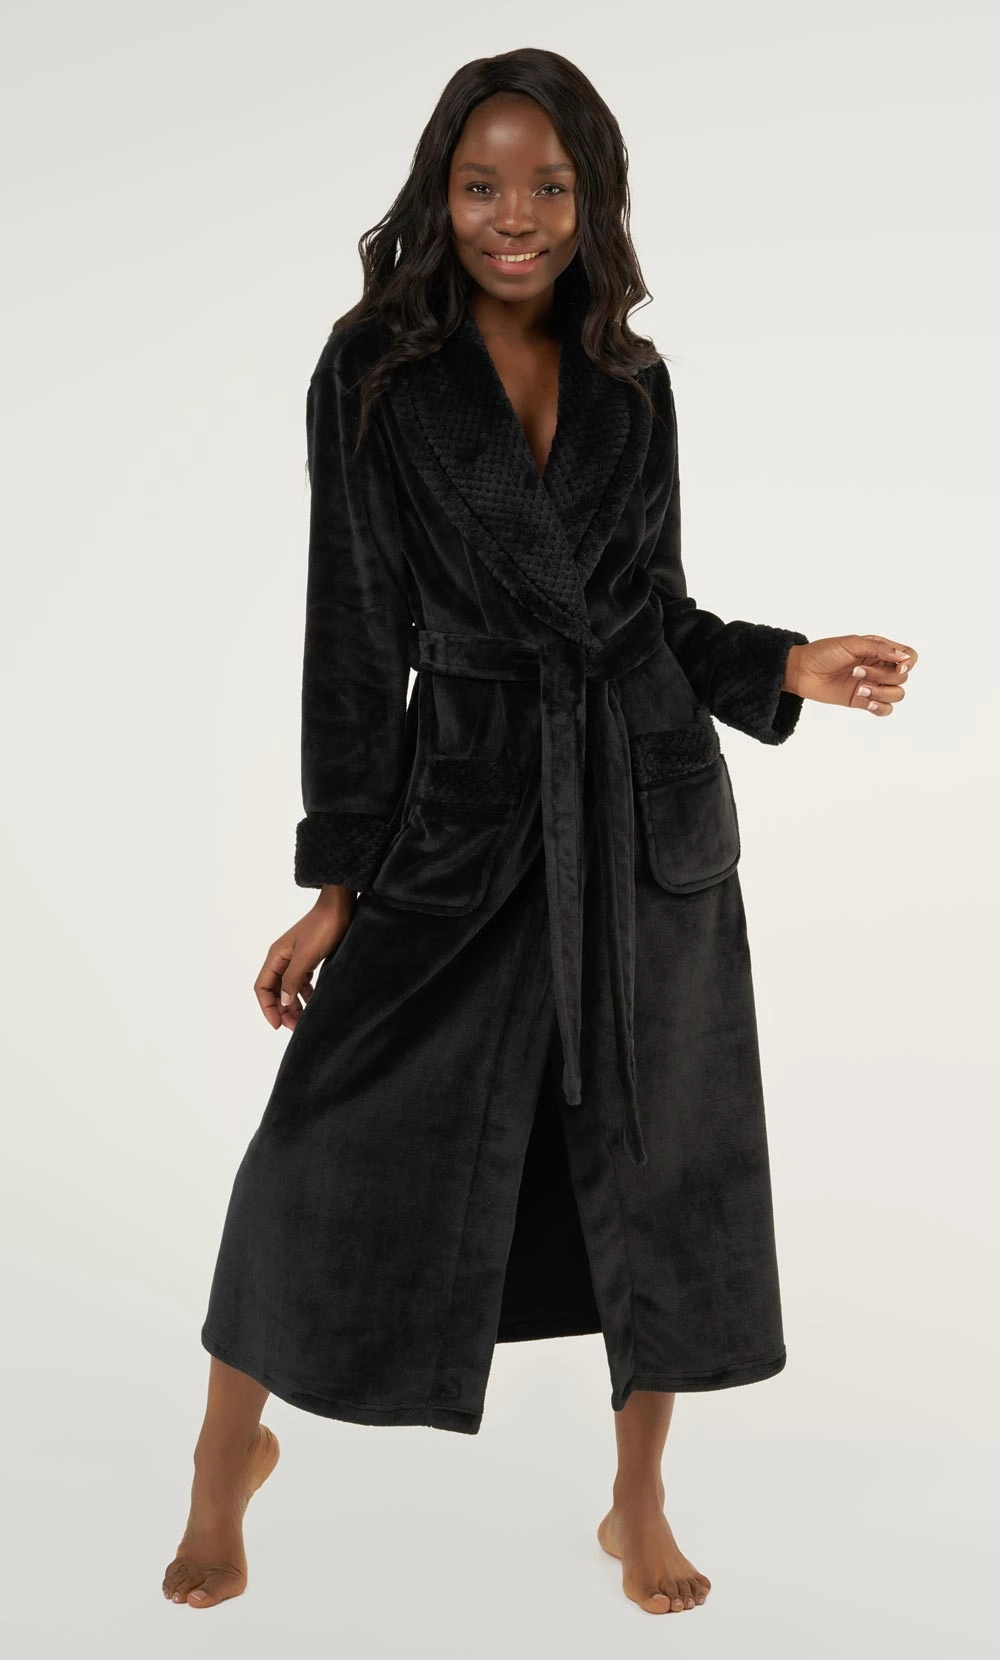 http://robemart.com/images/thumbnails/detailed/7/Black-Plush-Soft-Warm-Fleece-Bathrobe-Comfy-Womens-Robe2_4brg-f8.webp